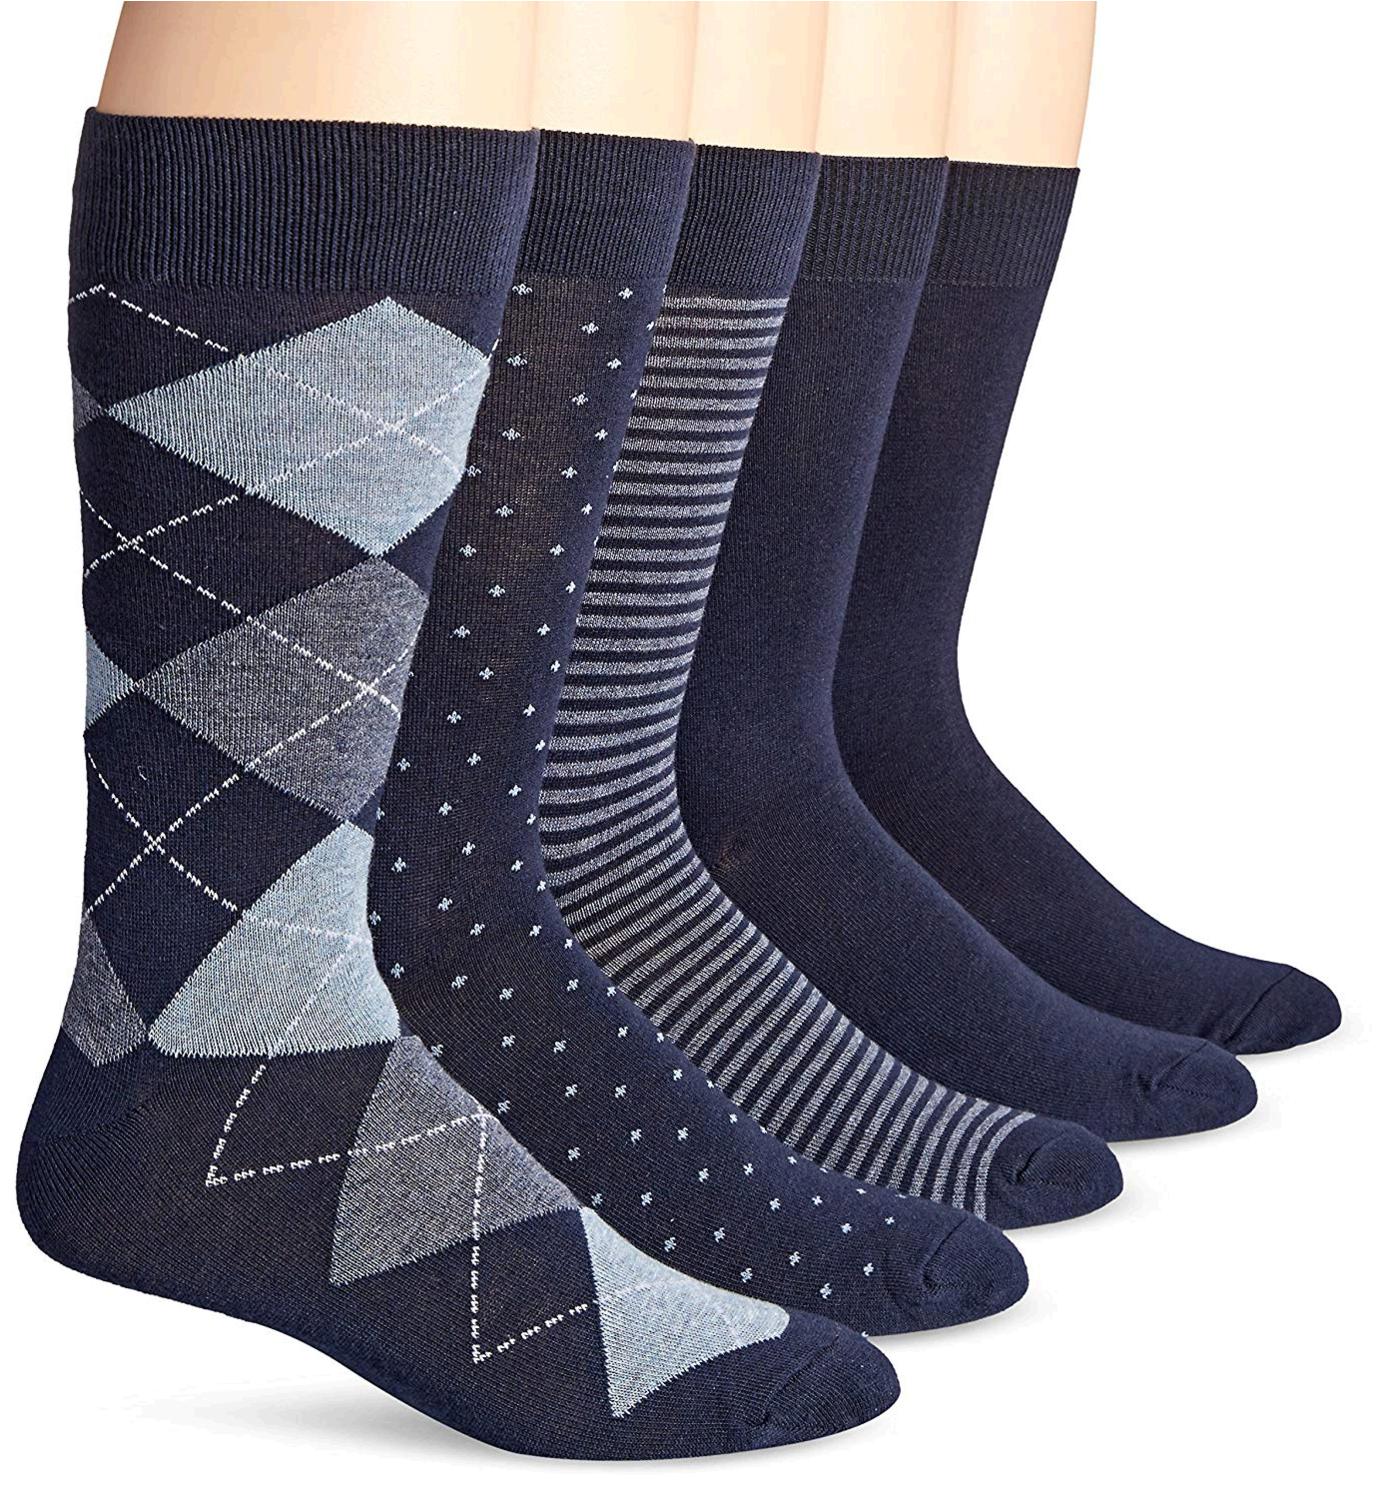 Essentials Men's 5-Pack Patterned Dress Socks,, Assorted Navy, Size 8.0 ...